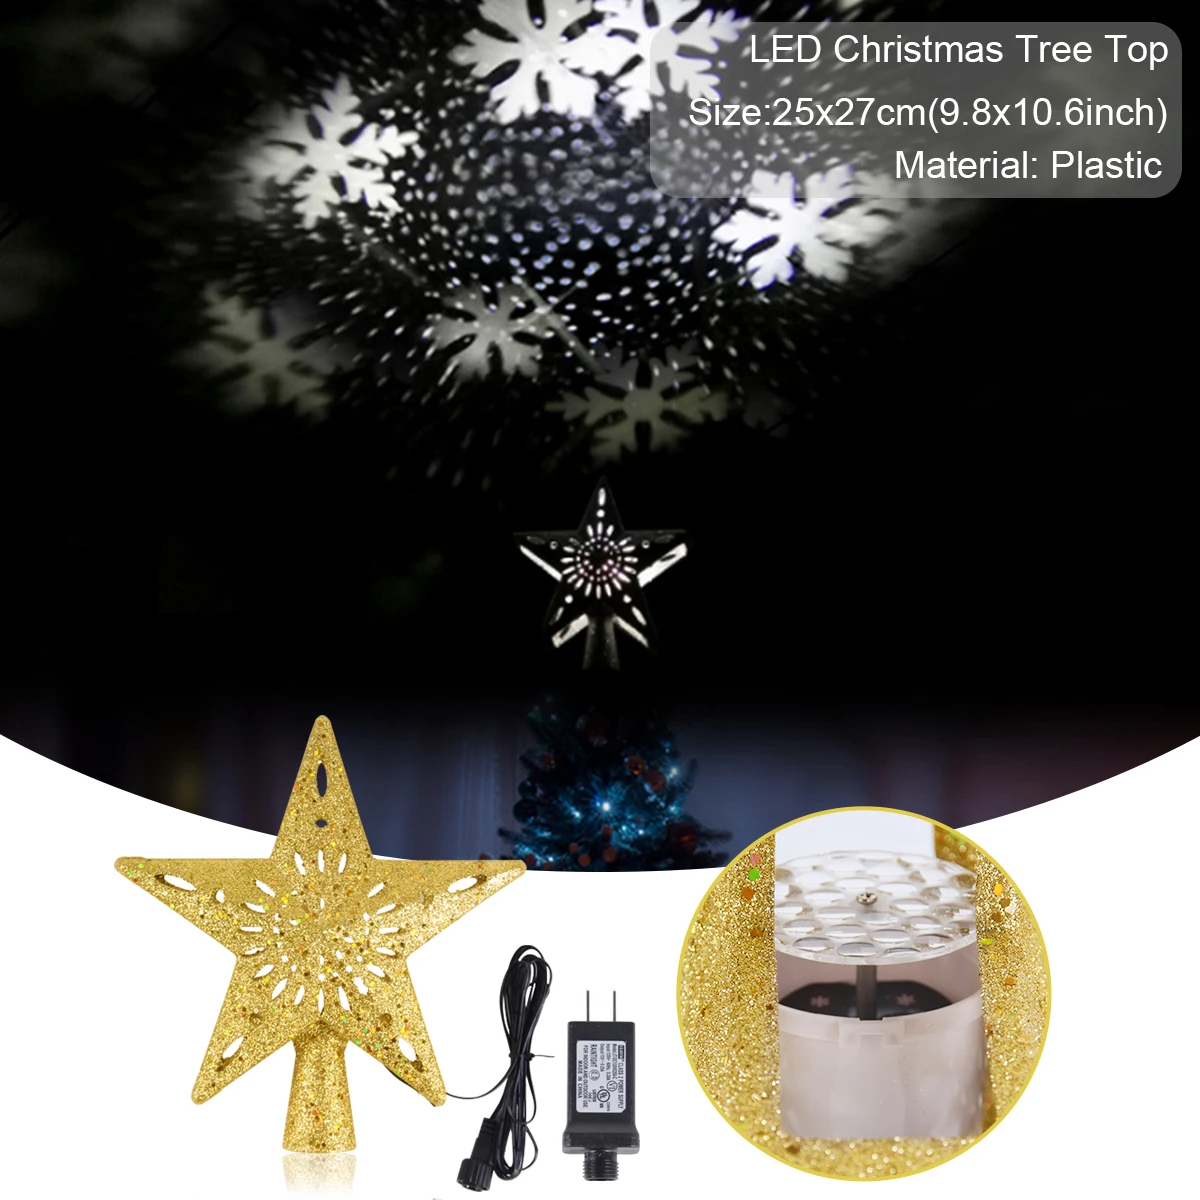 Huiran Christmas Tree Top Star Projection Snowflake Light Merry Christmas Decor for Home Christmas Ornaments New Year - Цвет: Tree top Star